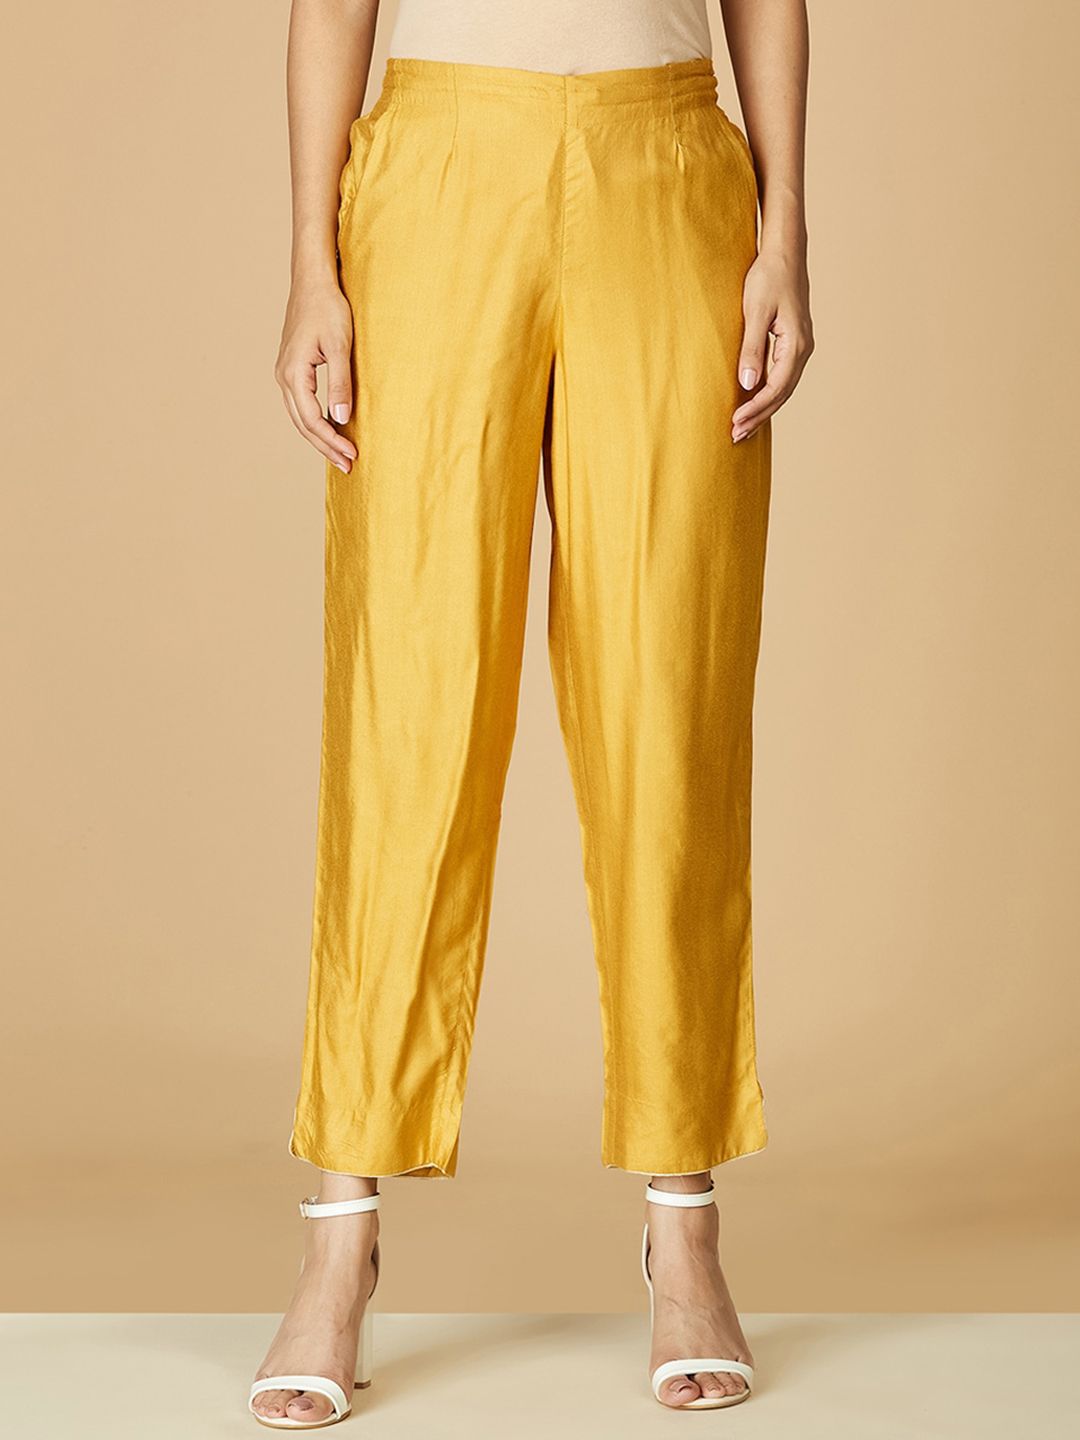 Fabindia Women Mustard Yellow Comfort Pleated Trousers Price in India